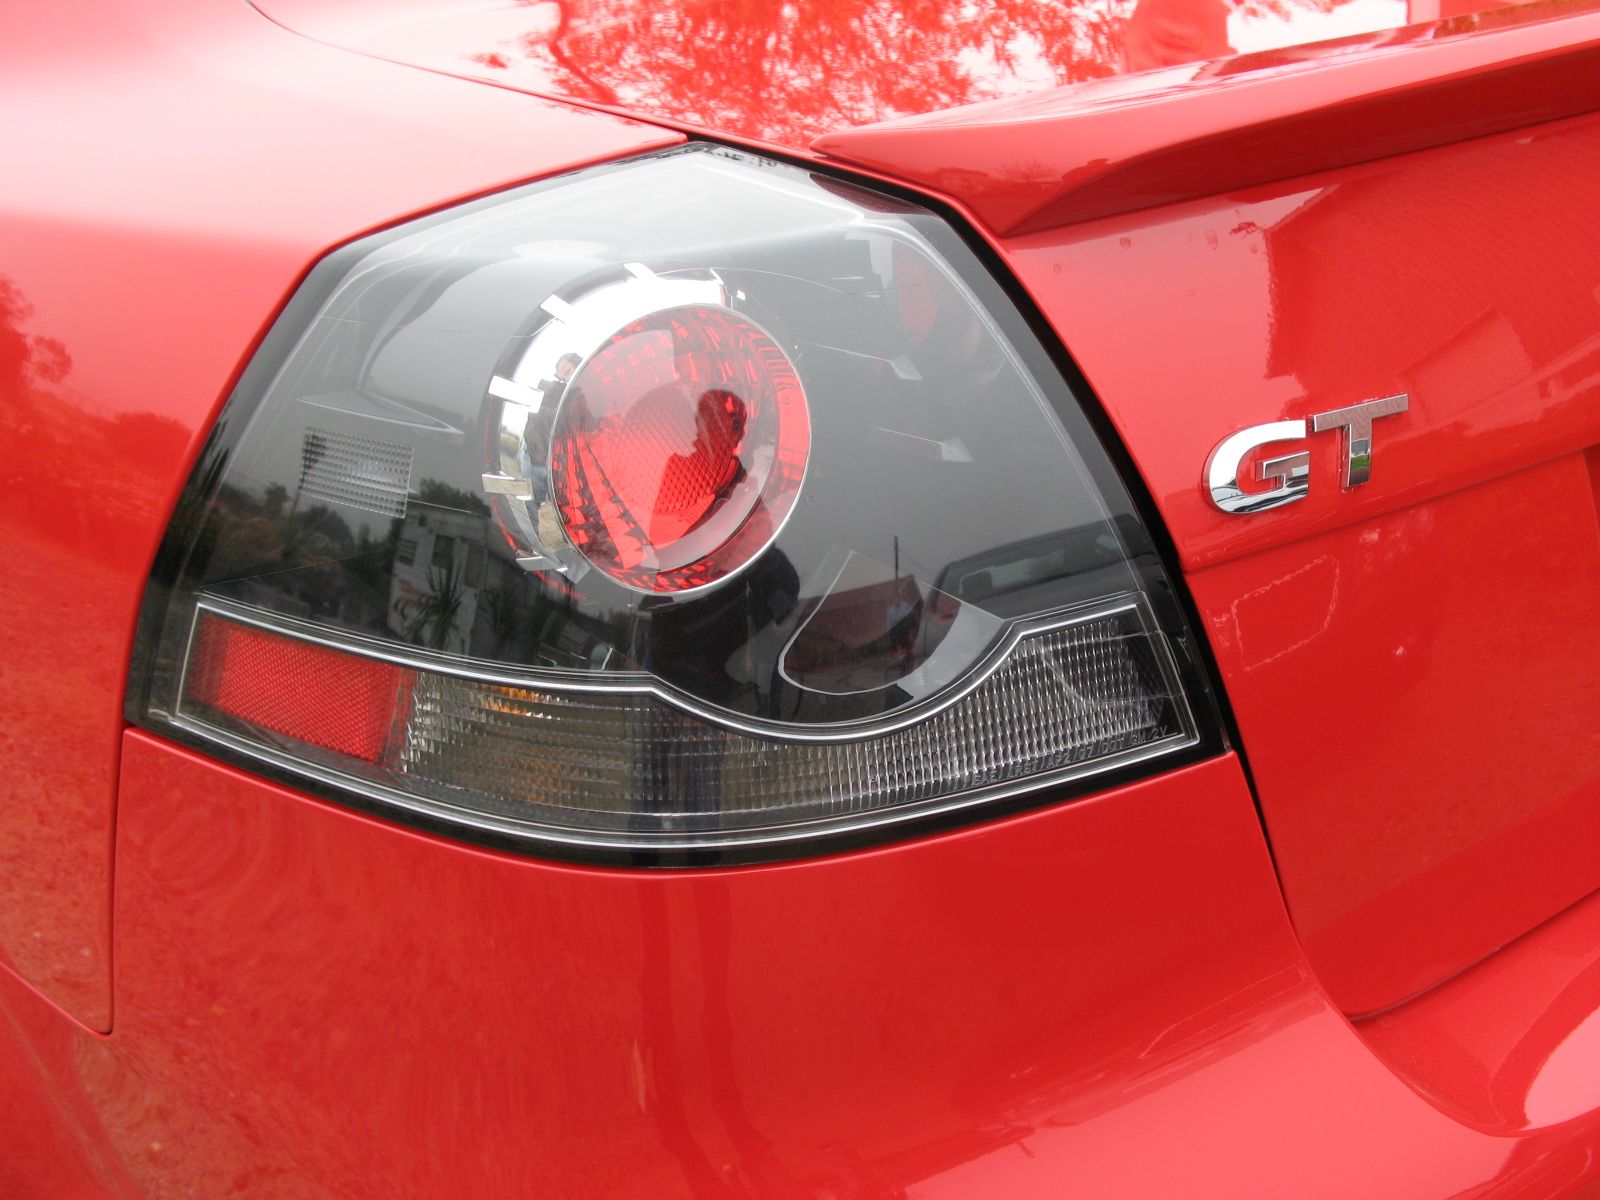 2008 Pontiac G8 test drive